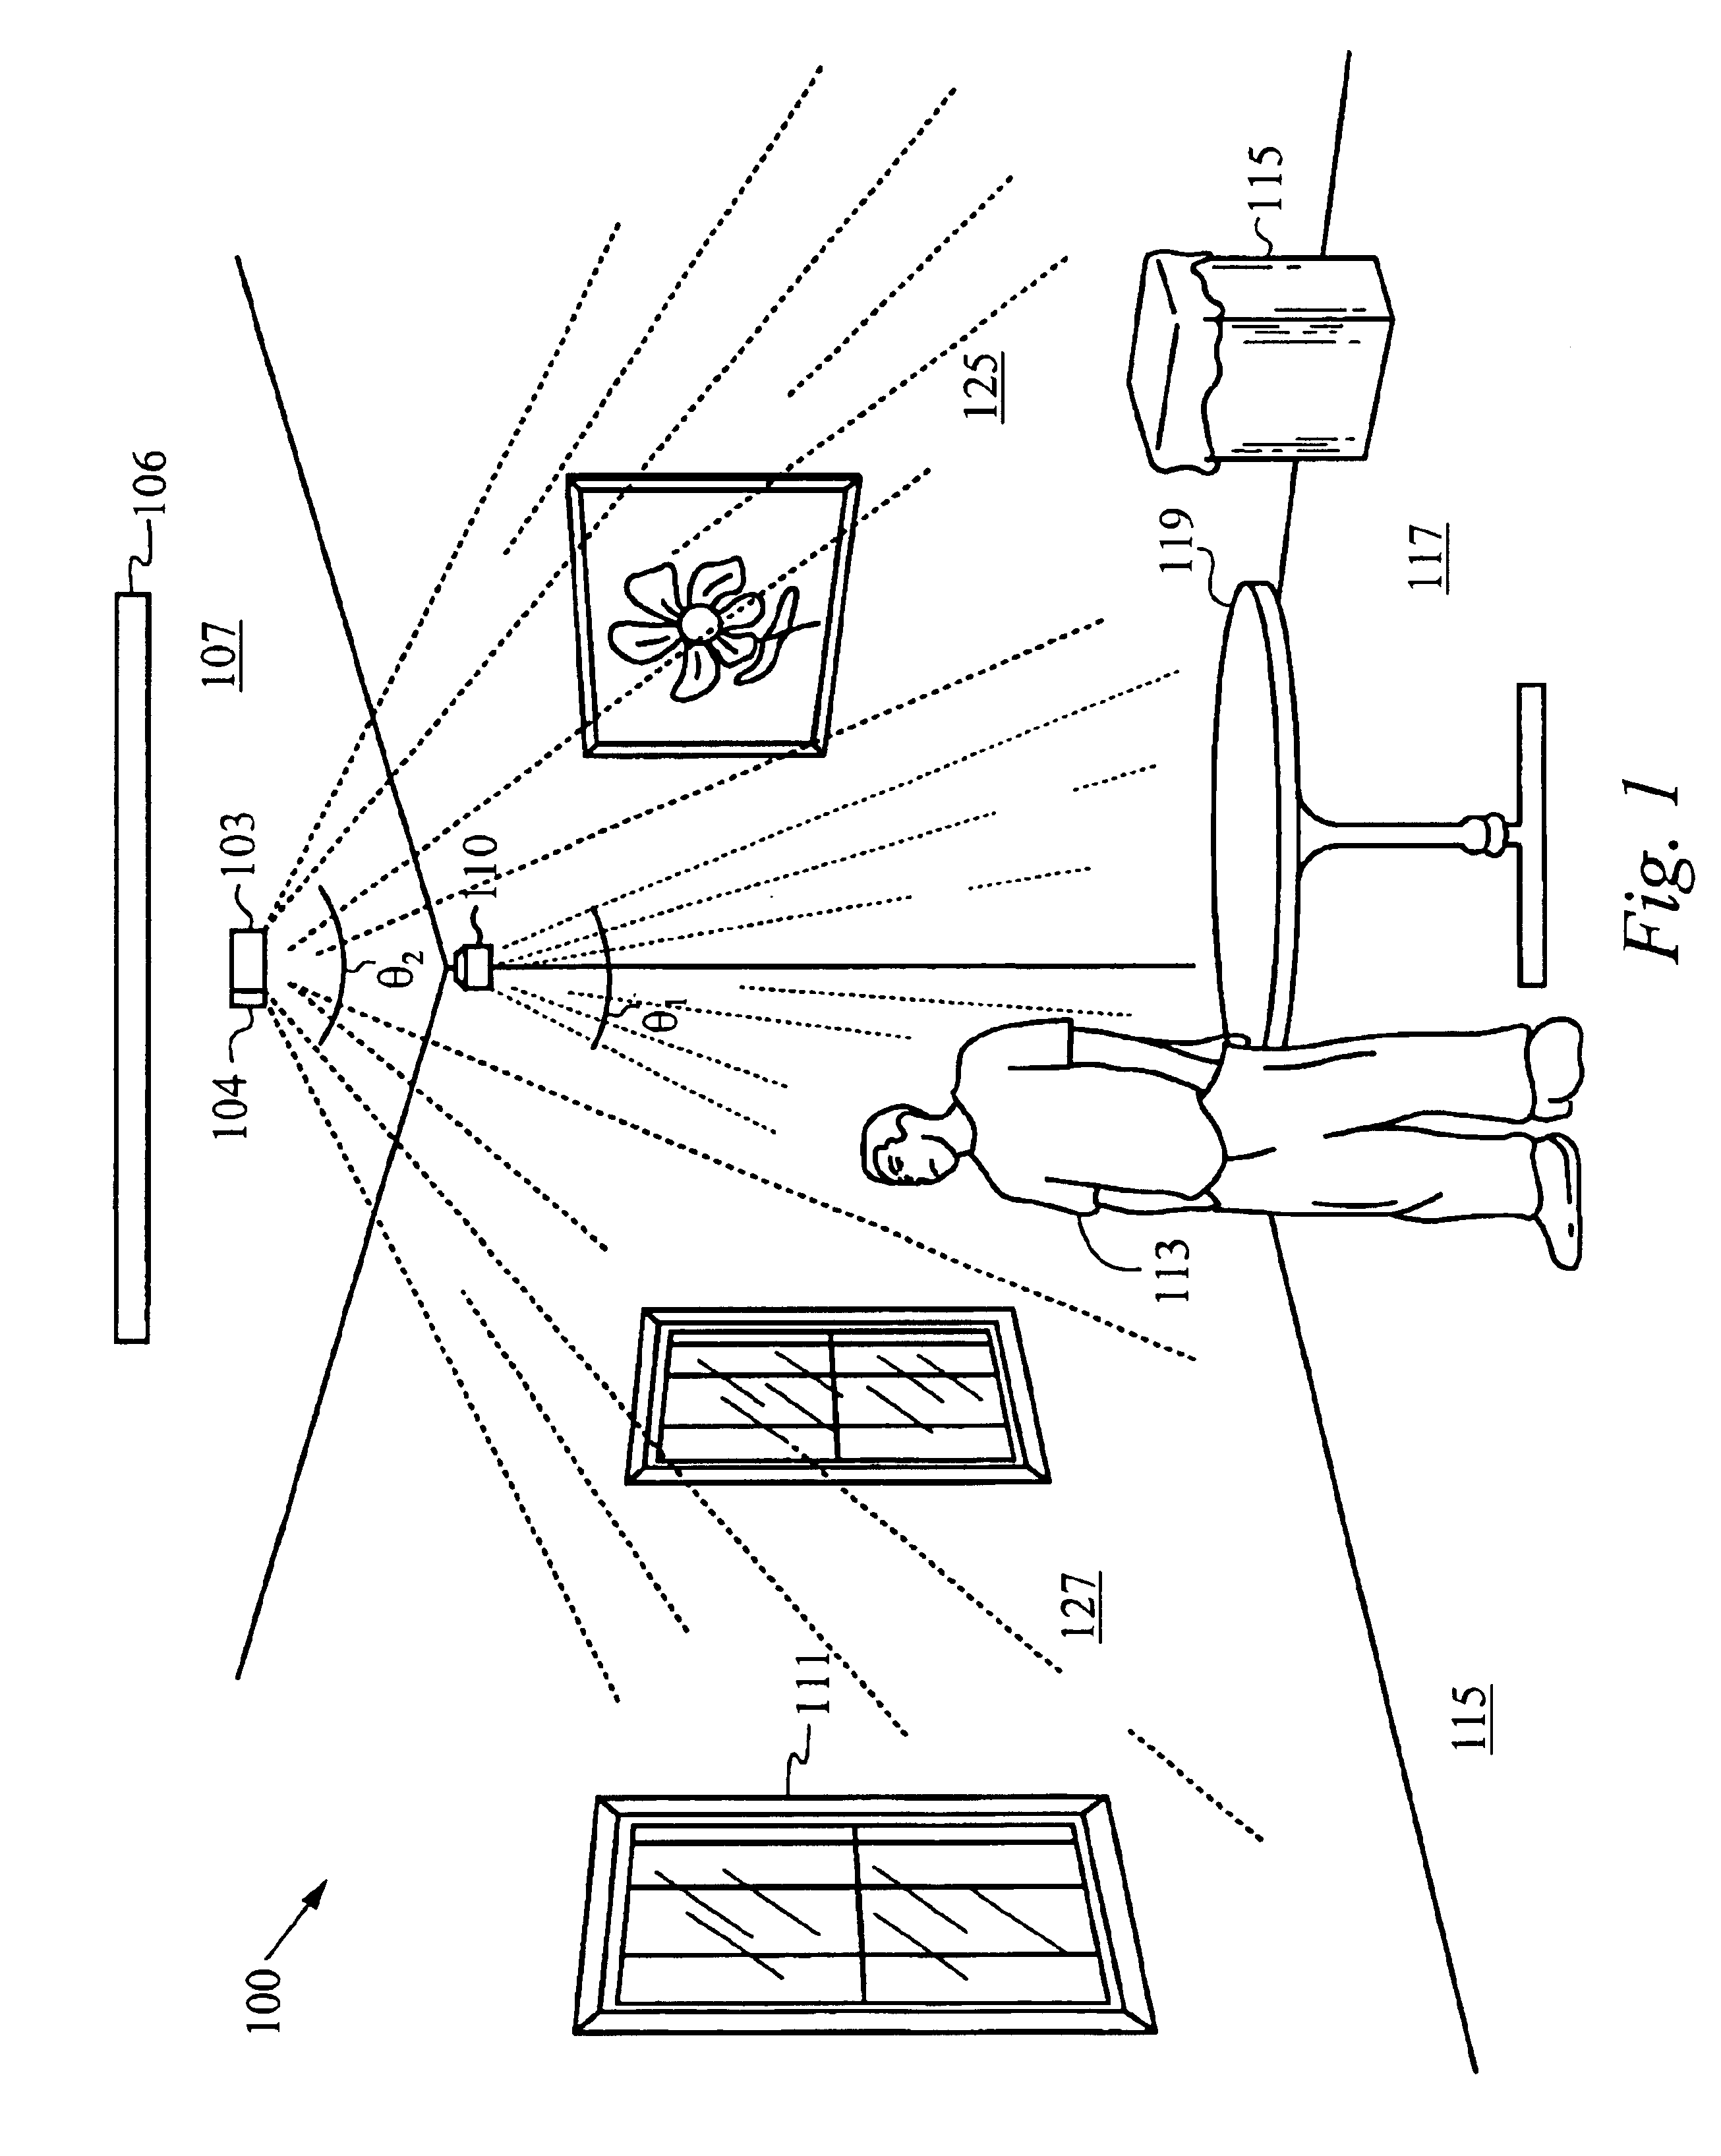 Broad field motion detector